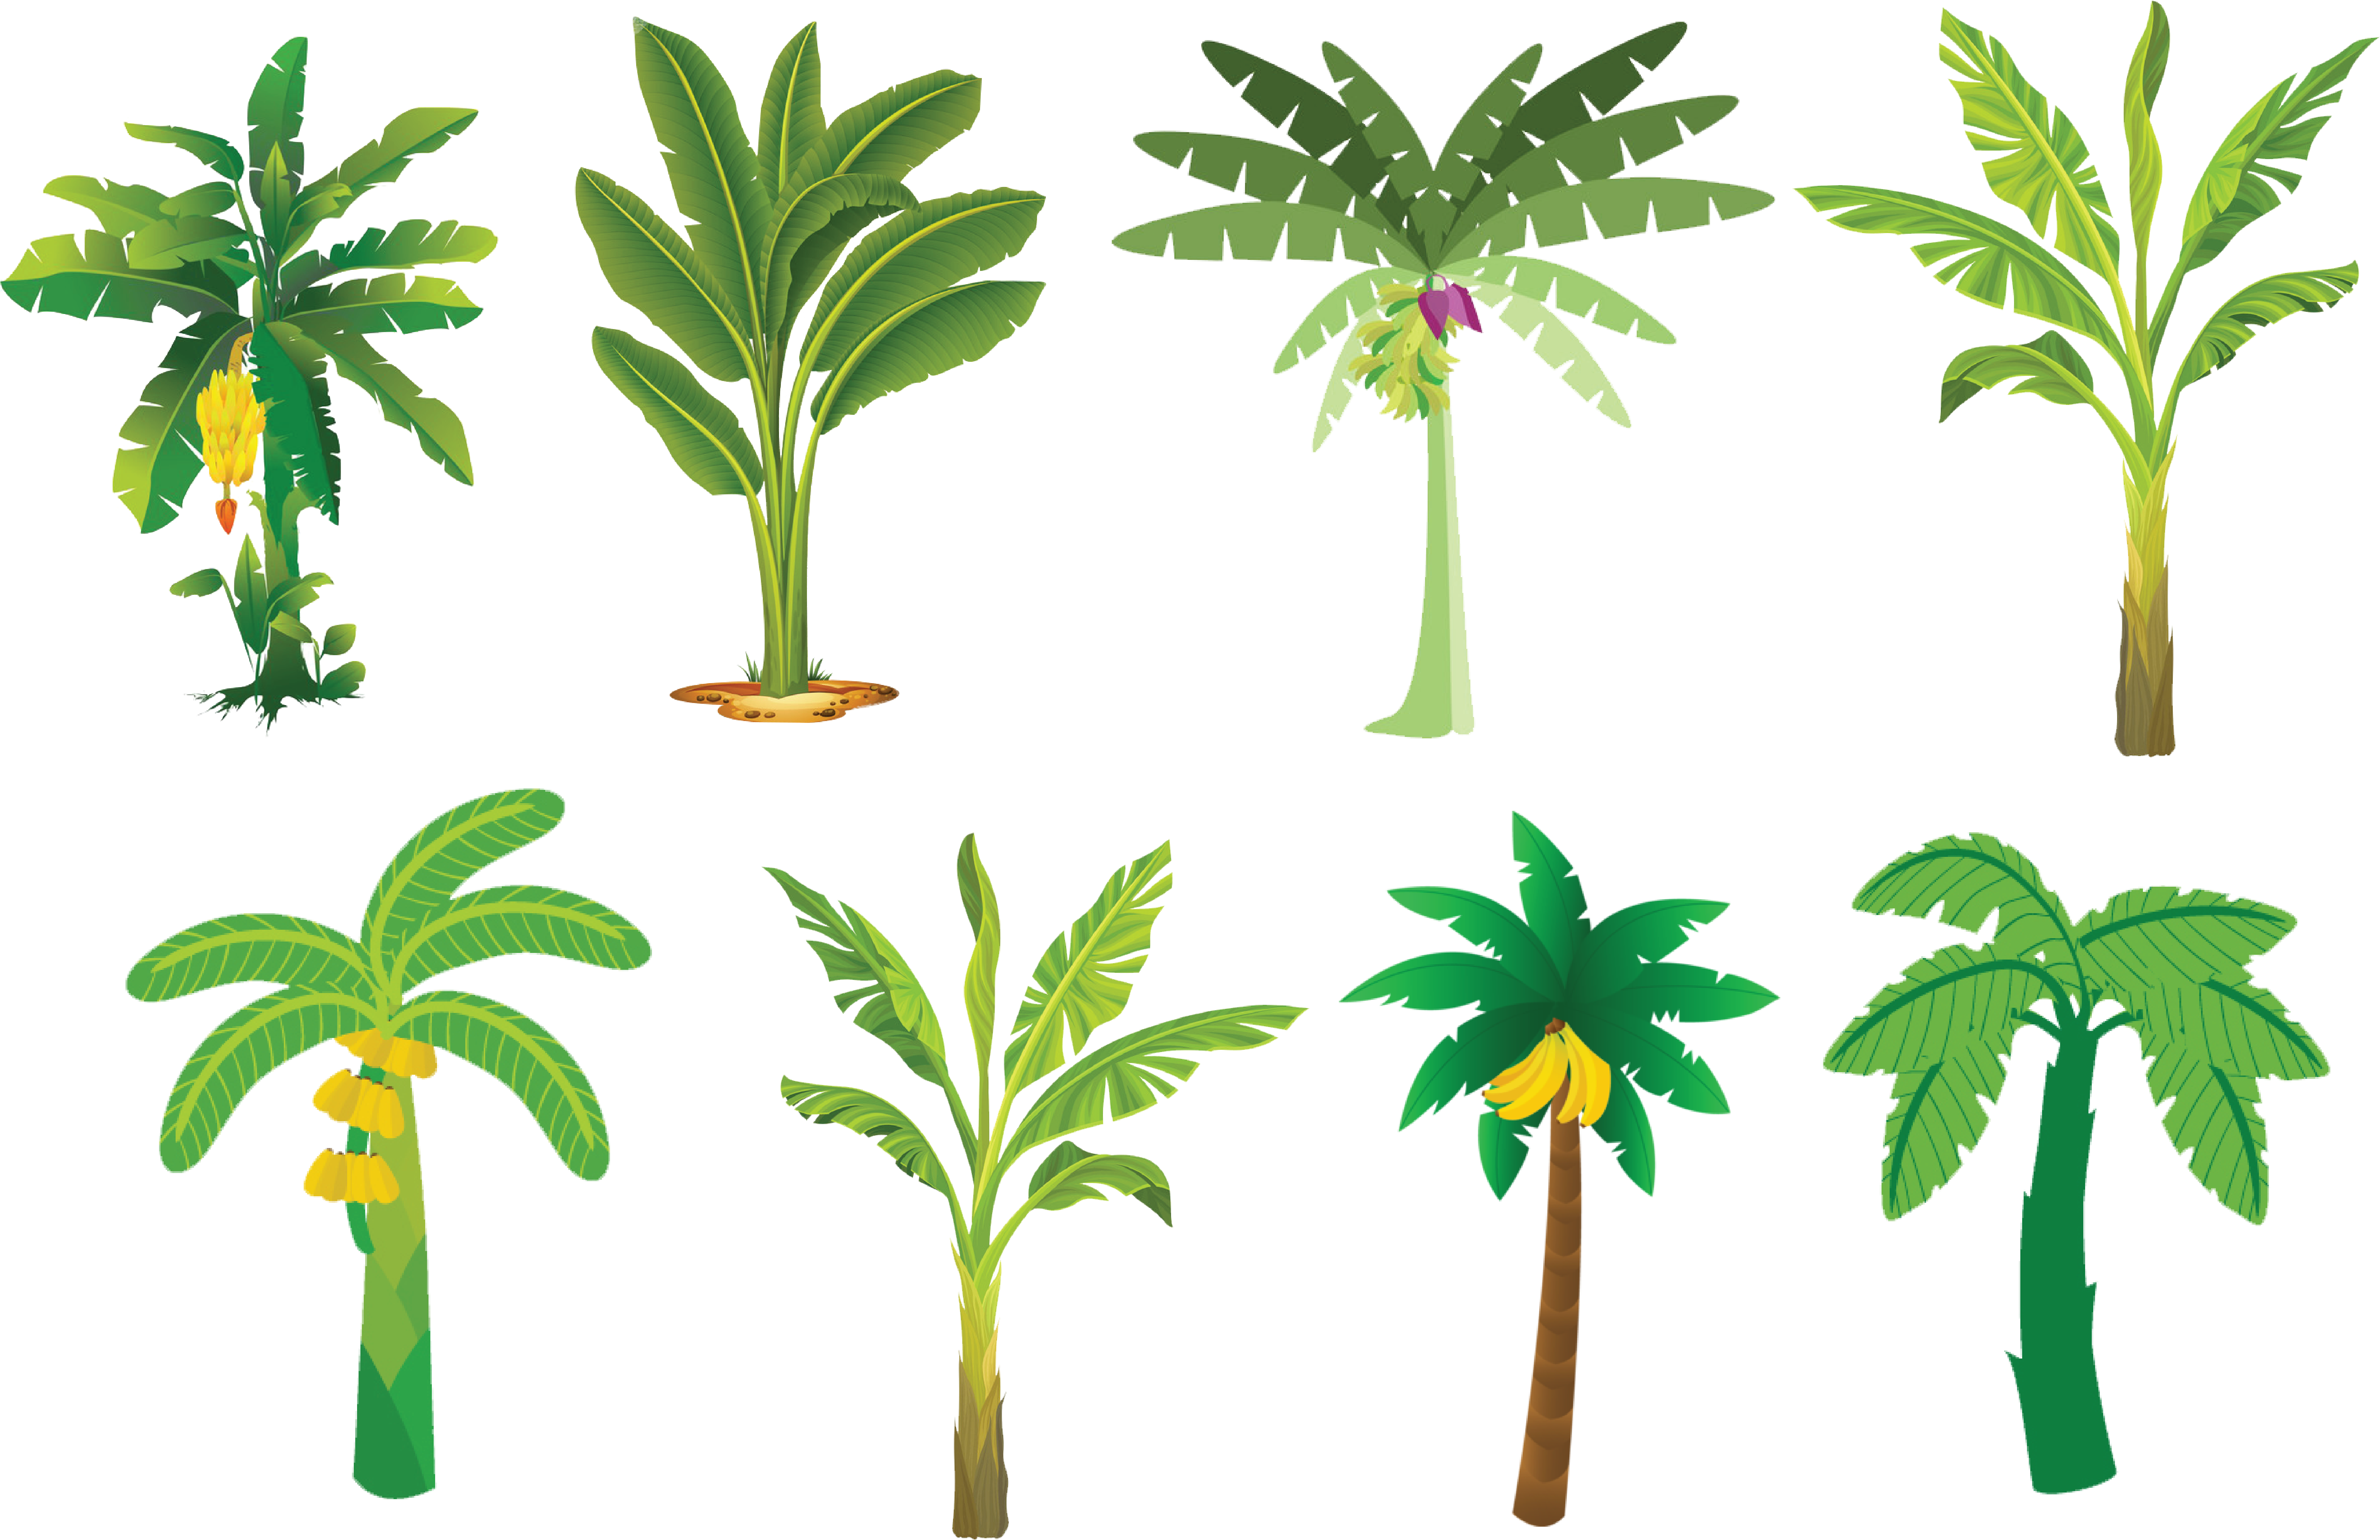 Different Banana Tree Varieties